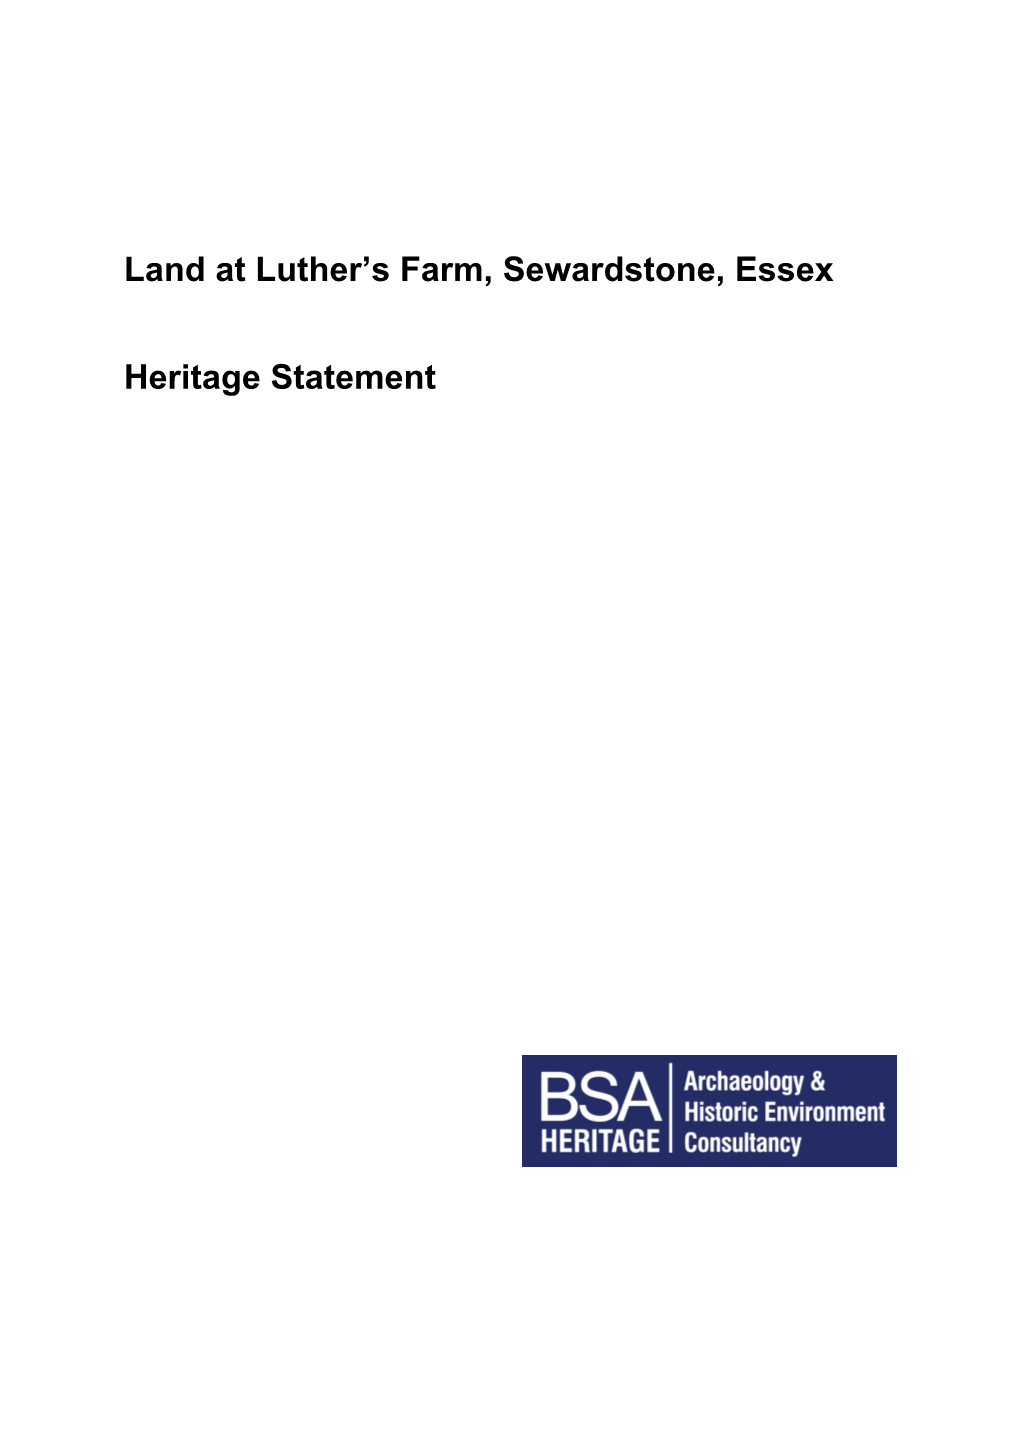 Land at Luther's Farm, Sewardstone, Essex Heritage Statement